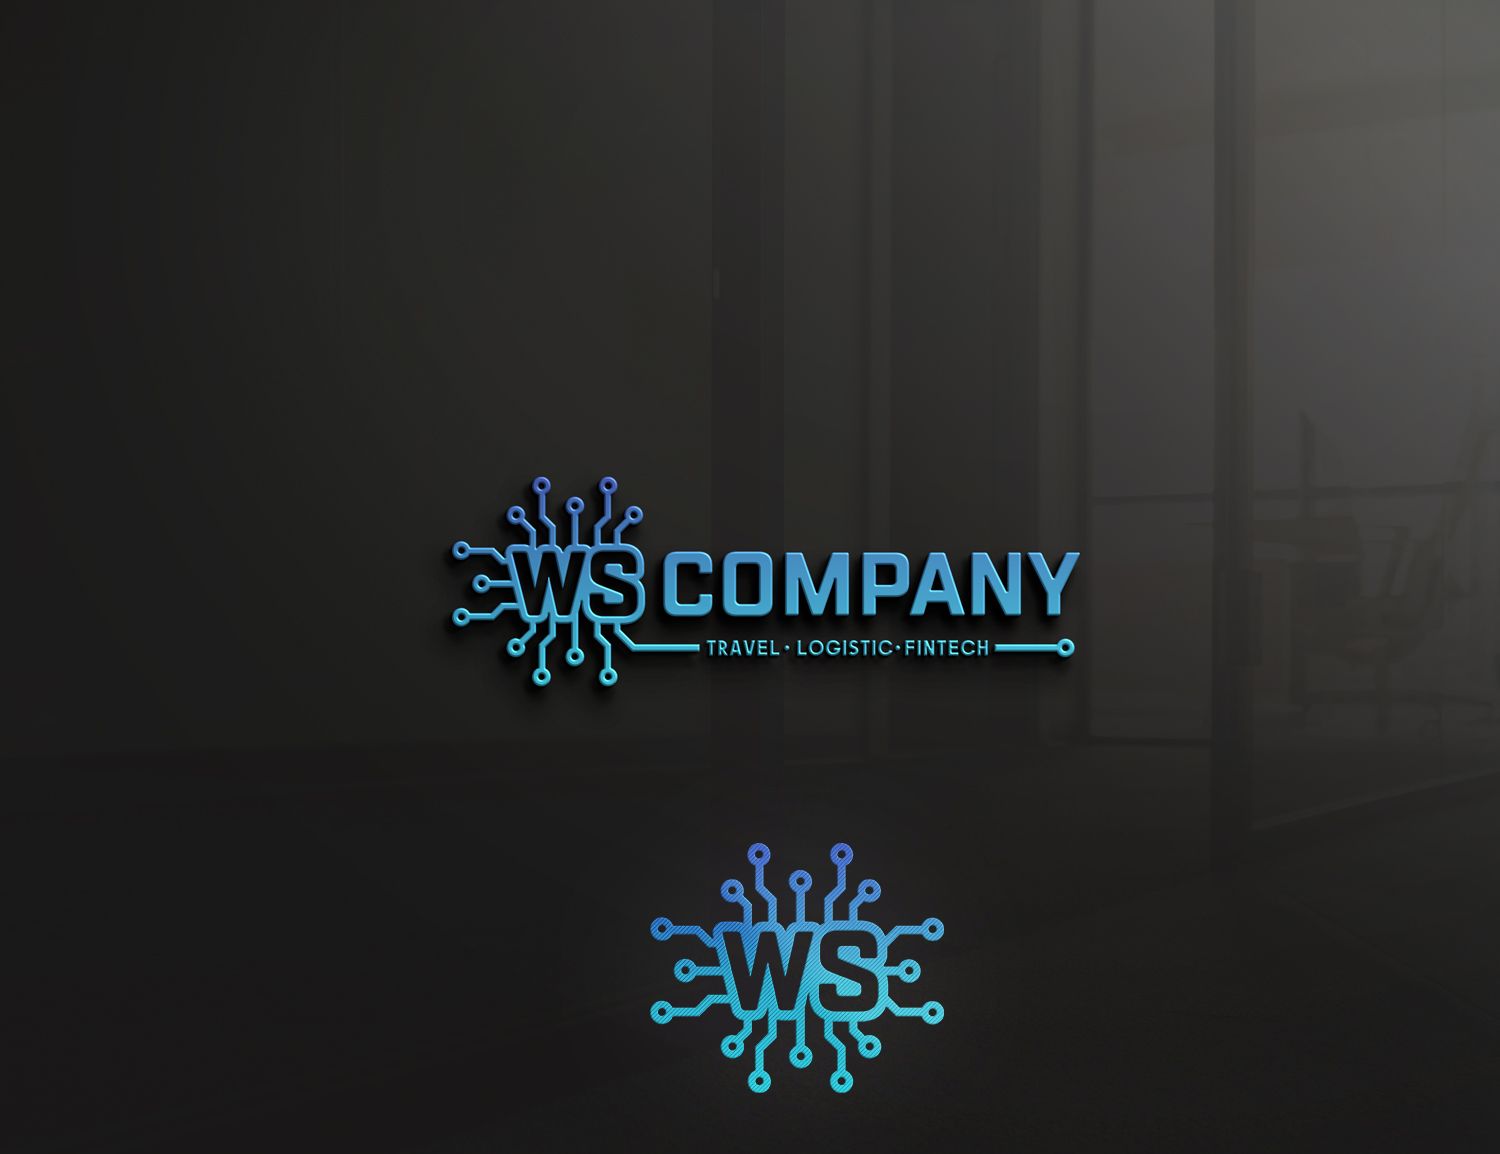 Логотип для WS.Company — Travel - Logistic - Fintech - дизайнер ilim1973